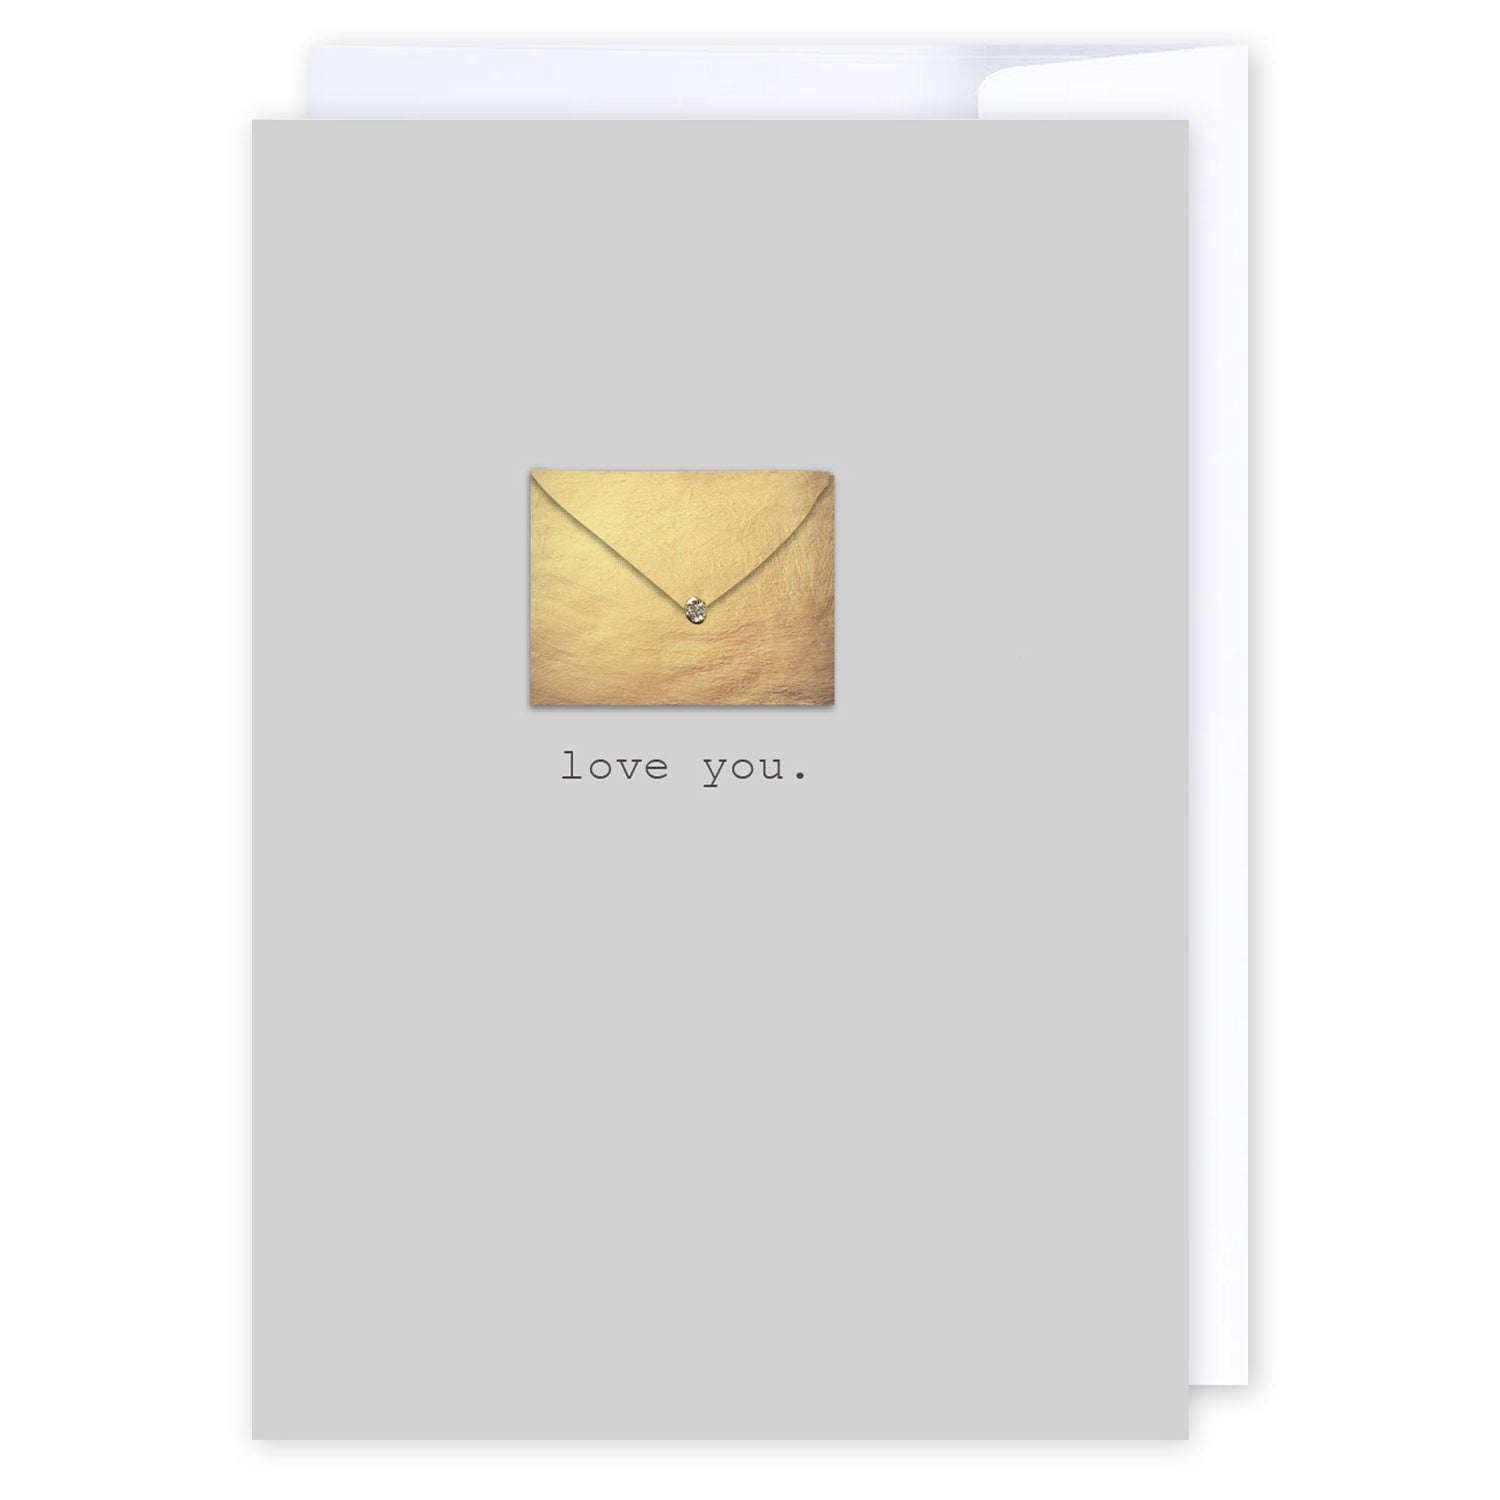 Love you - gold envelope